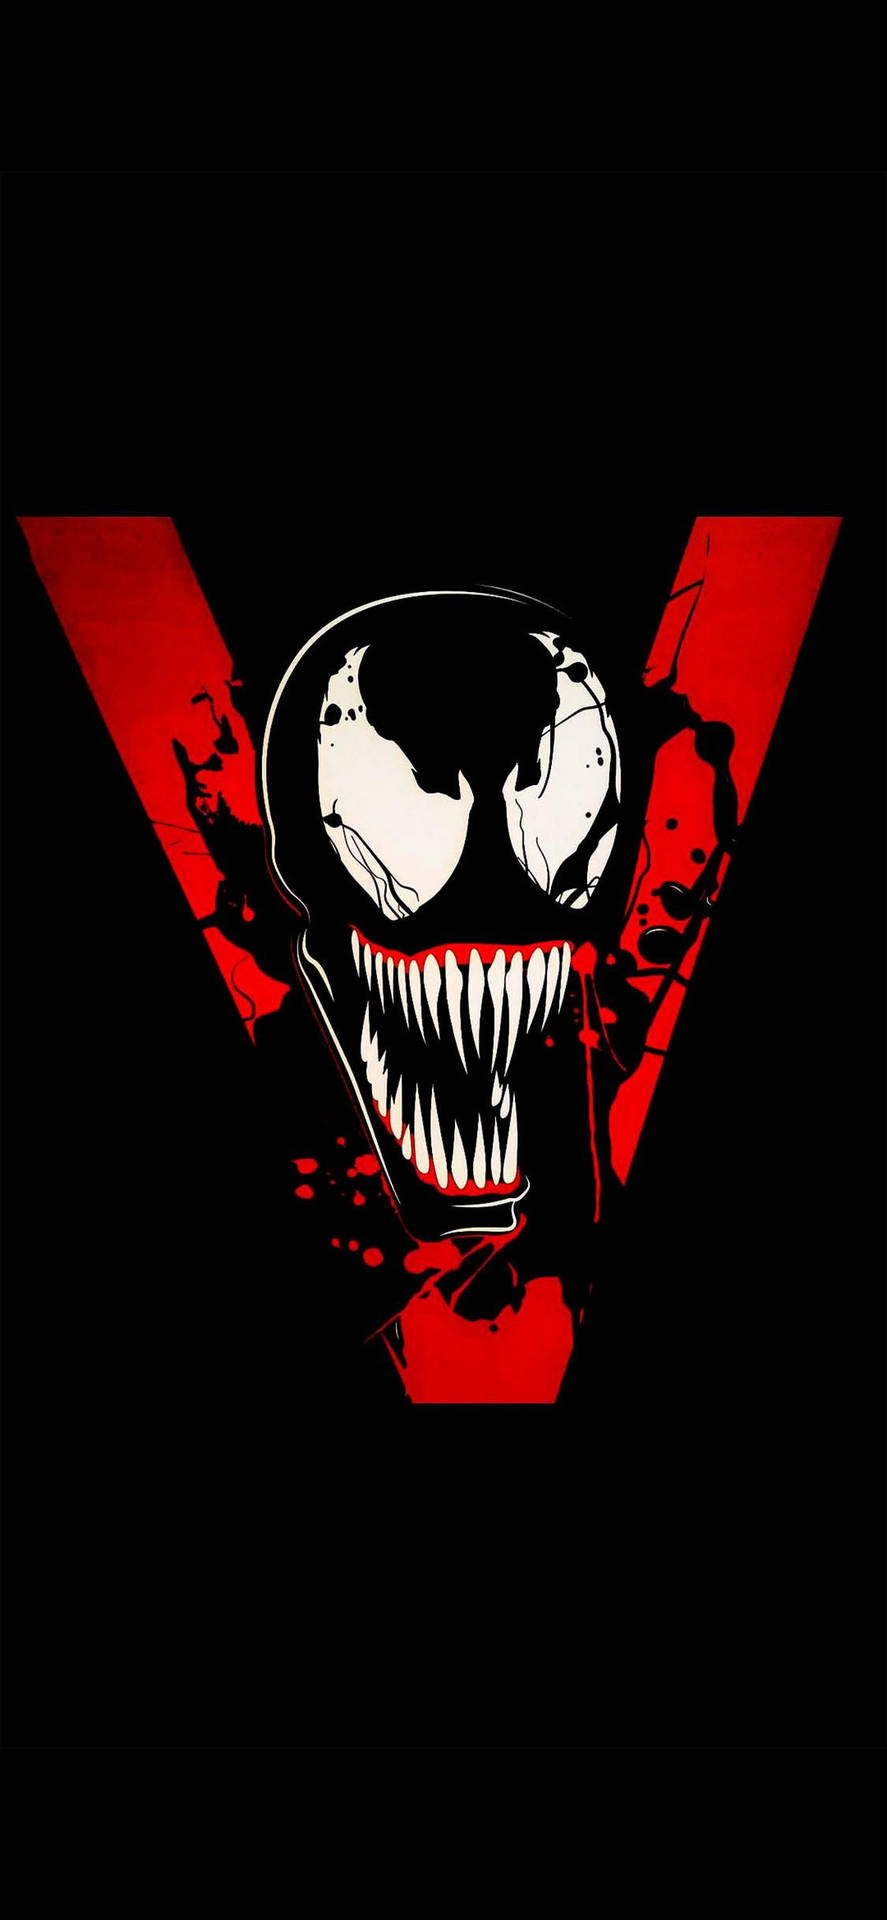 Marvel Anti Hero Venom Iphone Background